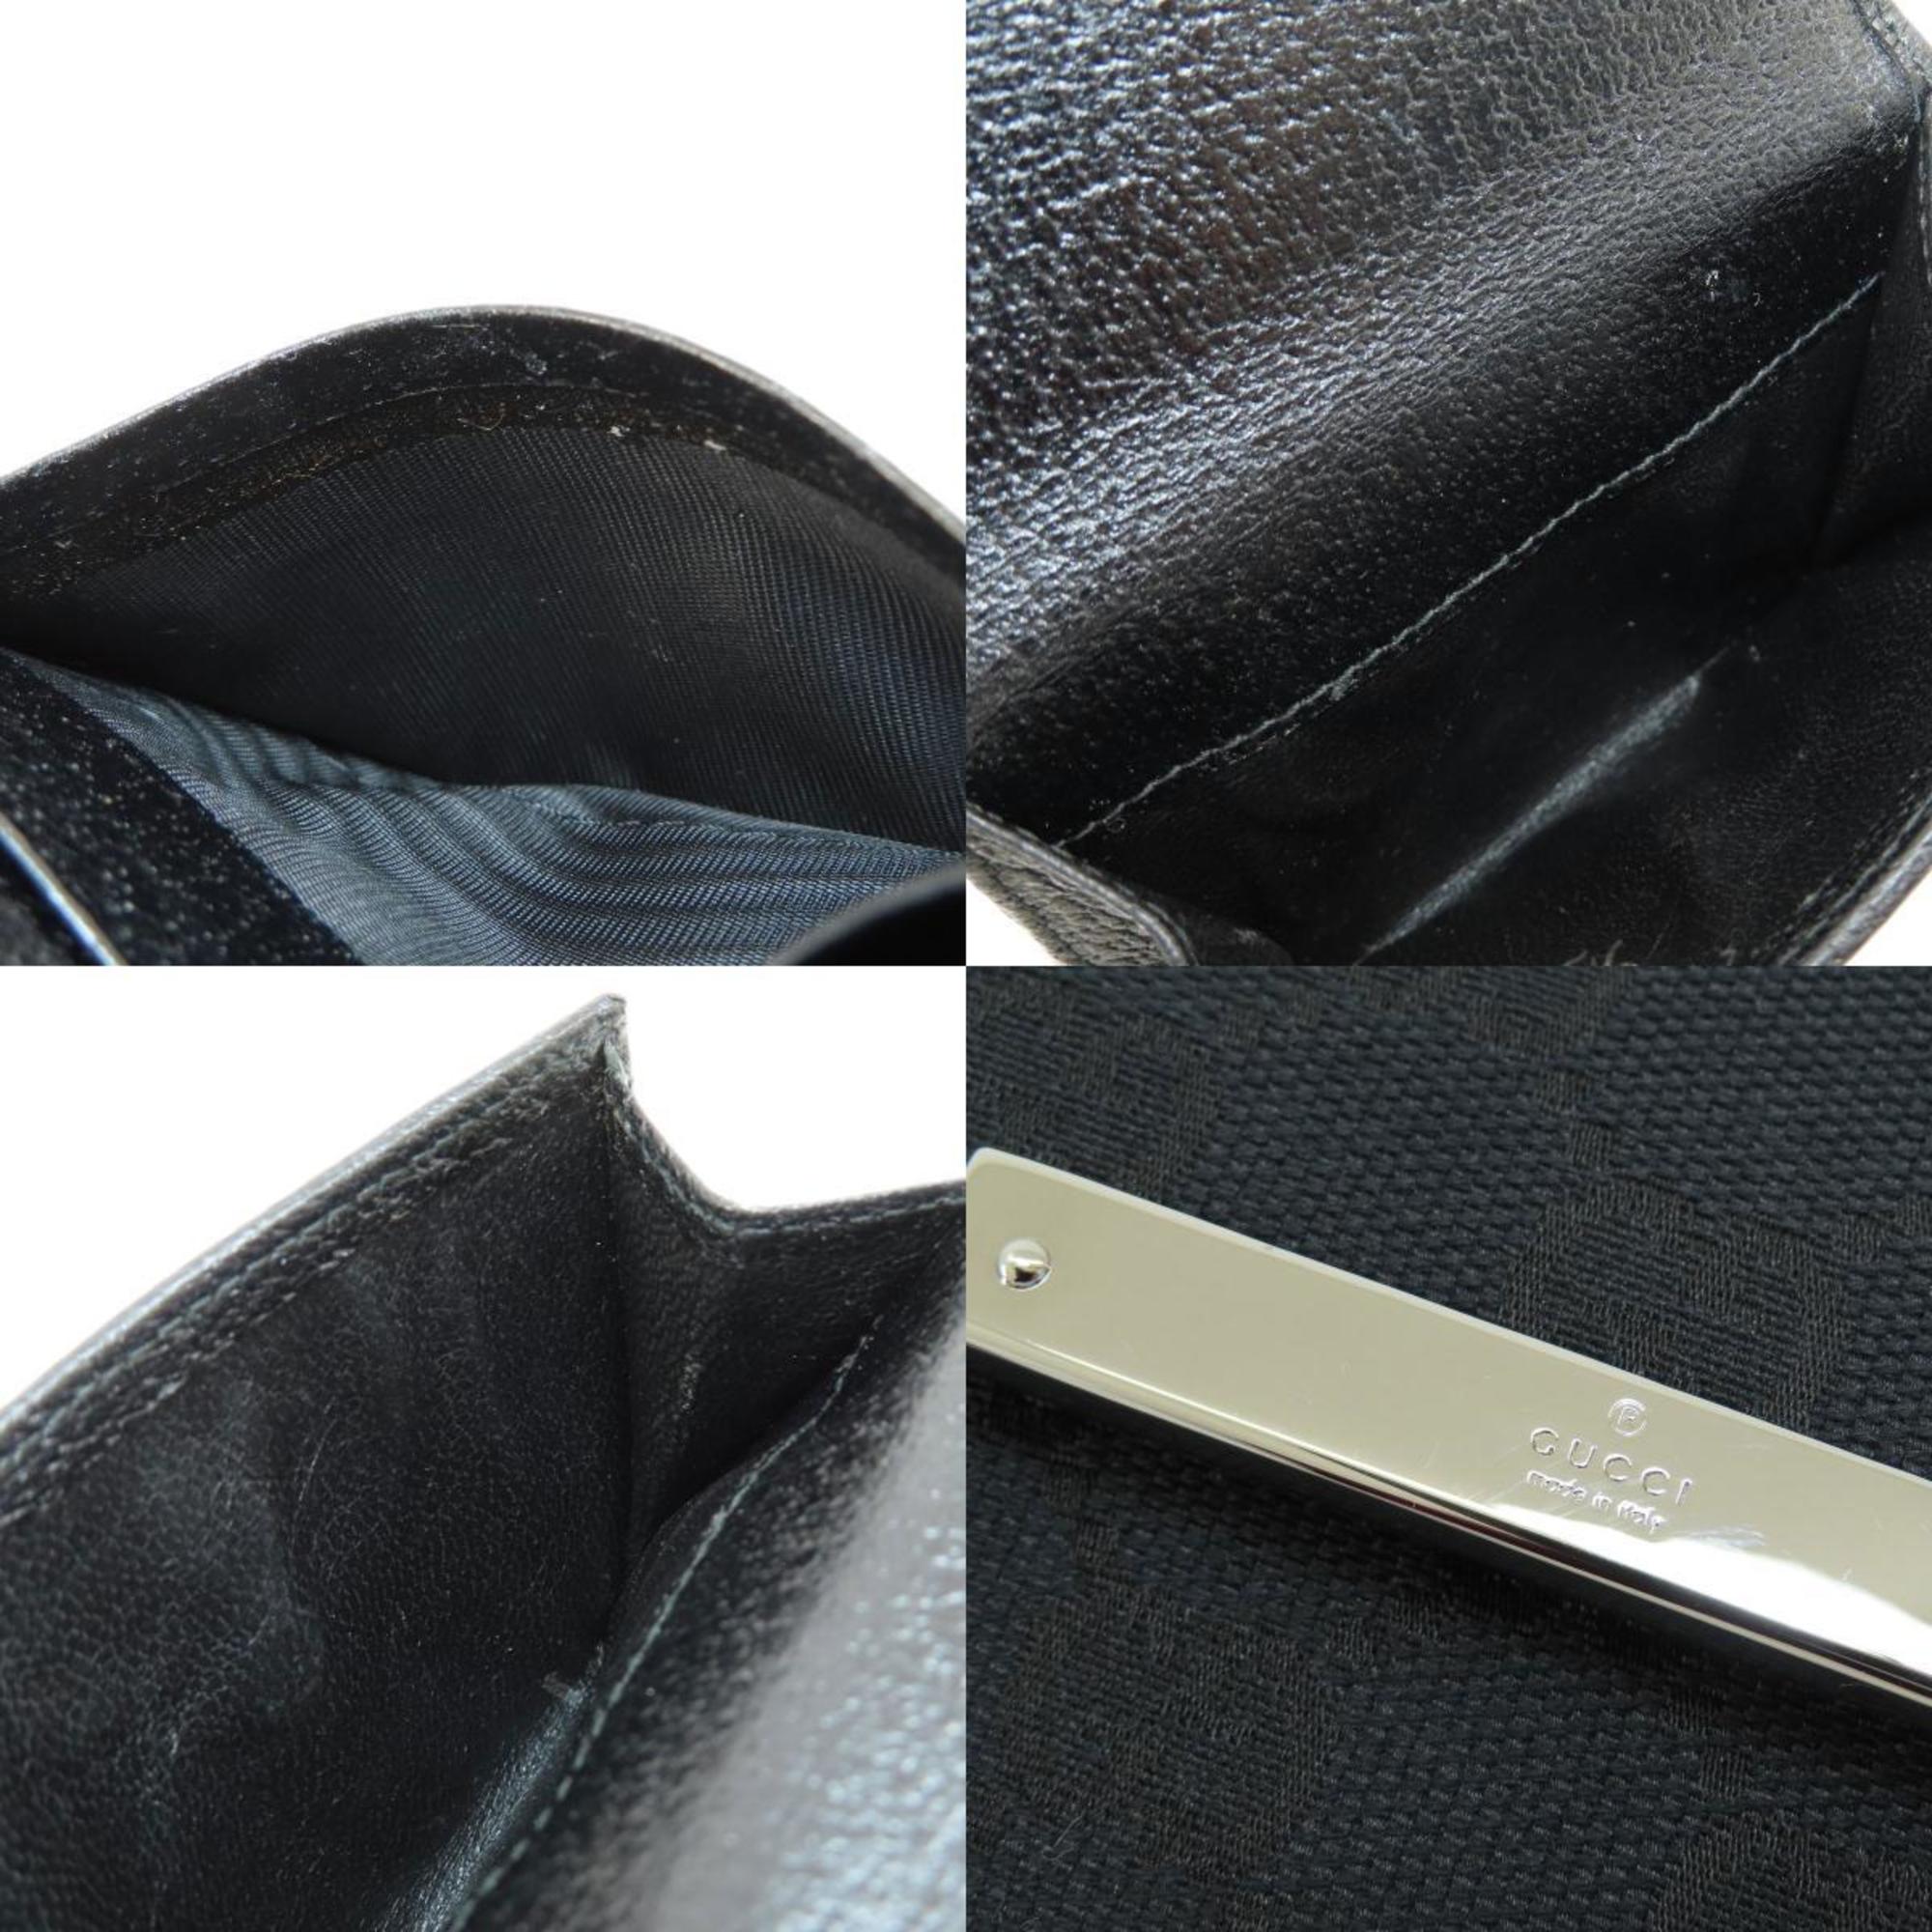 Gucci 112716 GG W Bi-fold Wallet Canvas Leather Women's